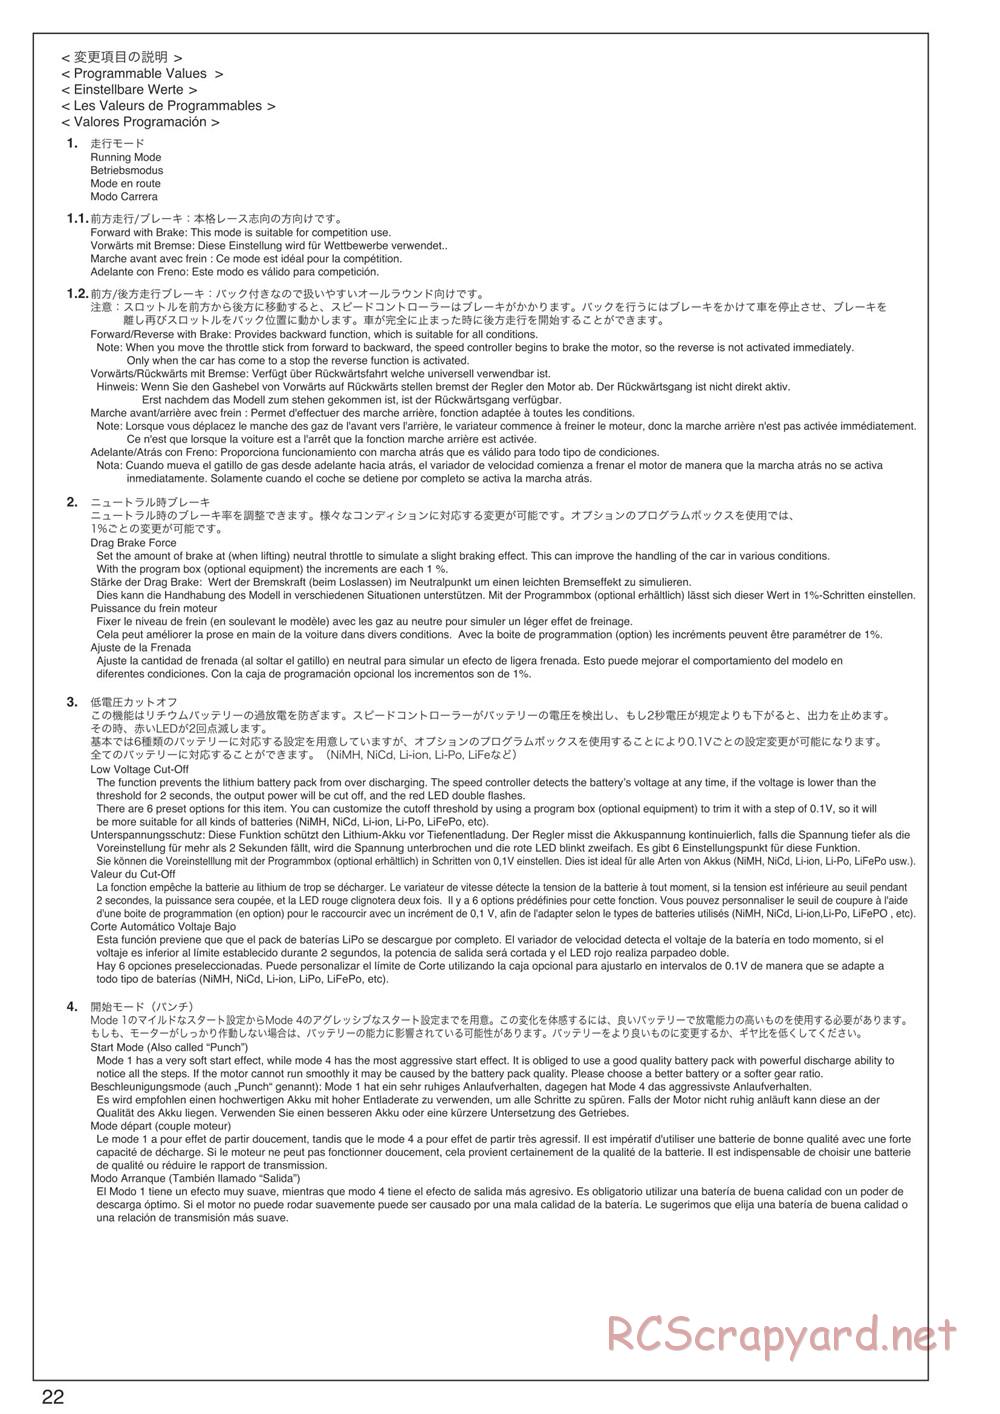 Kyosho - DMT VE-R - Manual - Page 22